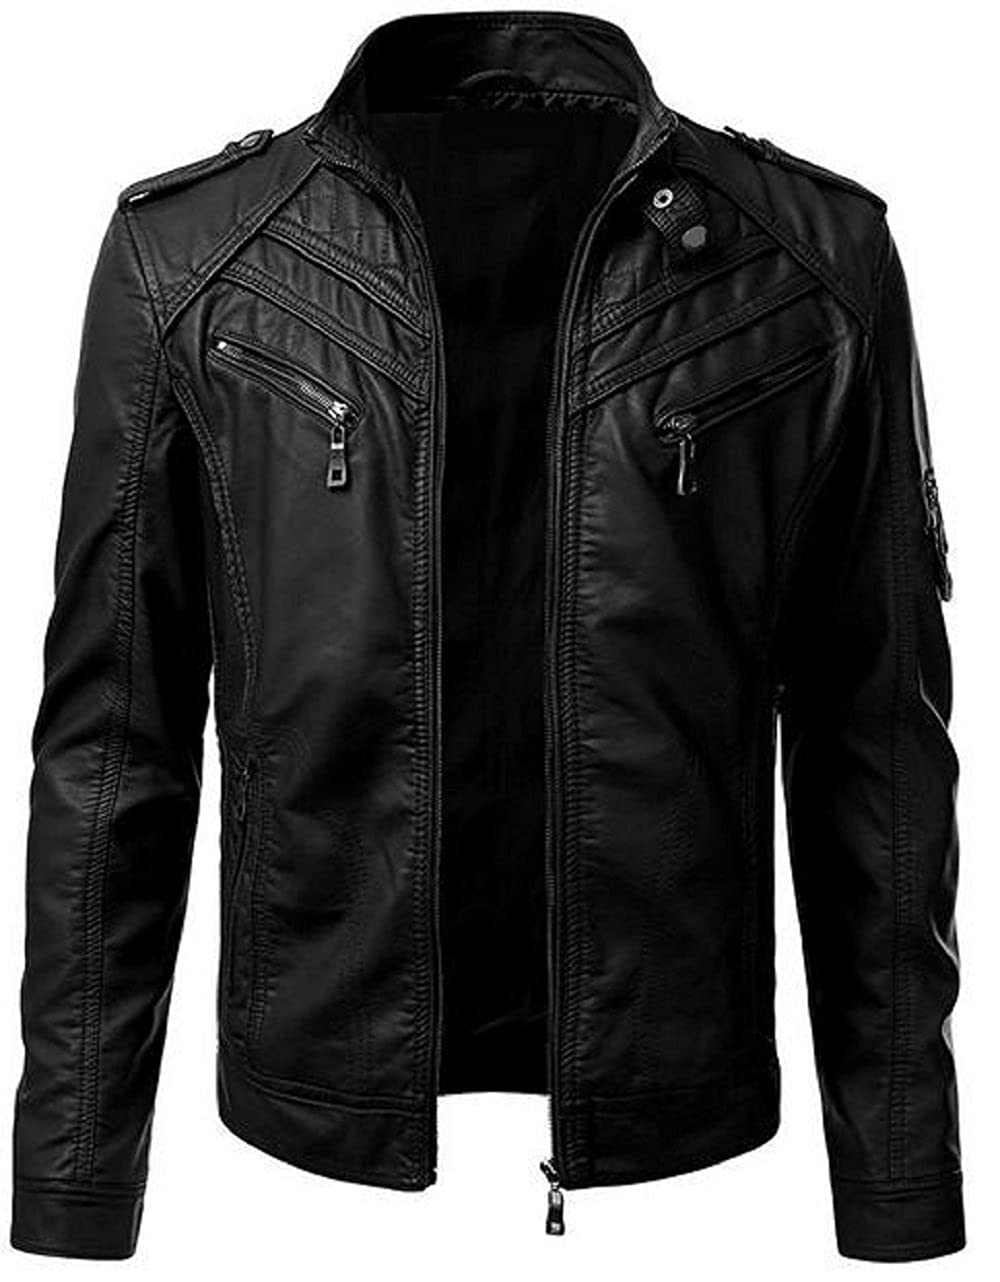 Men's Black Leather Biker Jacket, Grey Turtleneck, Charcoal Jeans, Black  Suede Low Top Sneakers | Leather jacket outfit men, Black outfit men, Mens  outfits